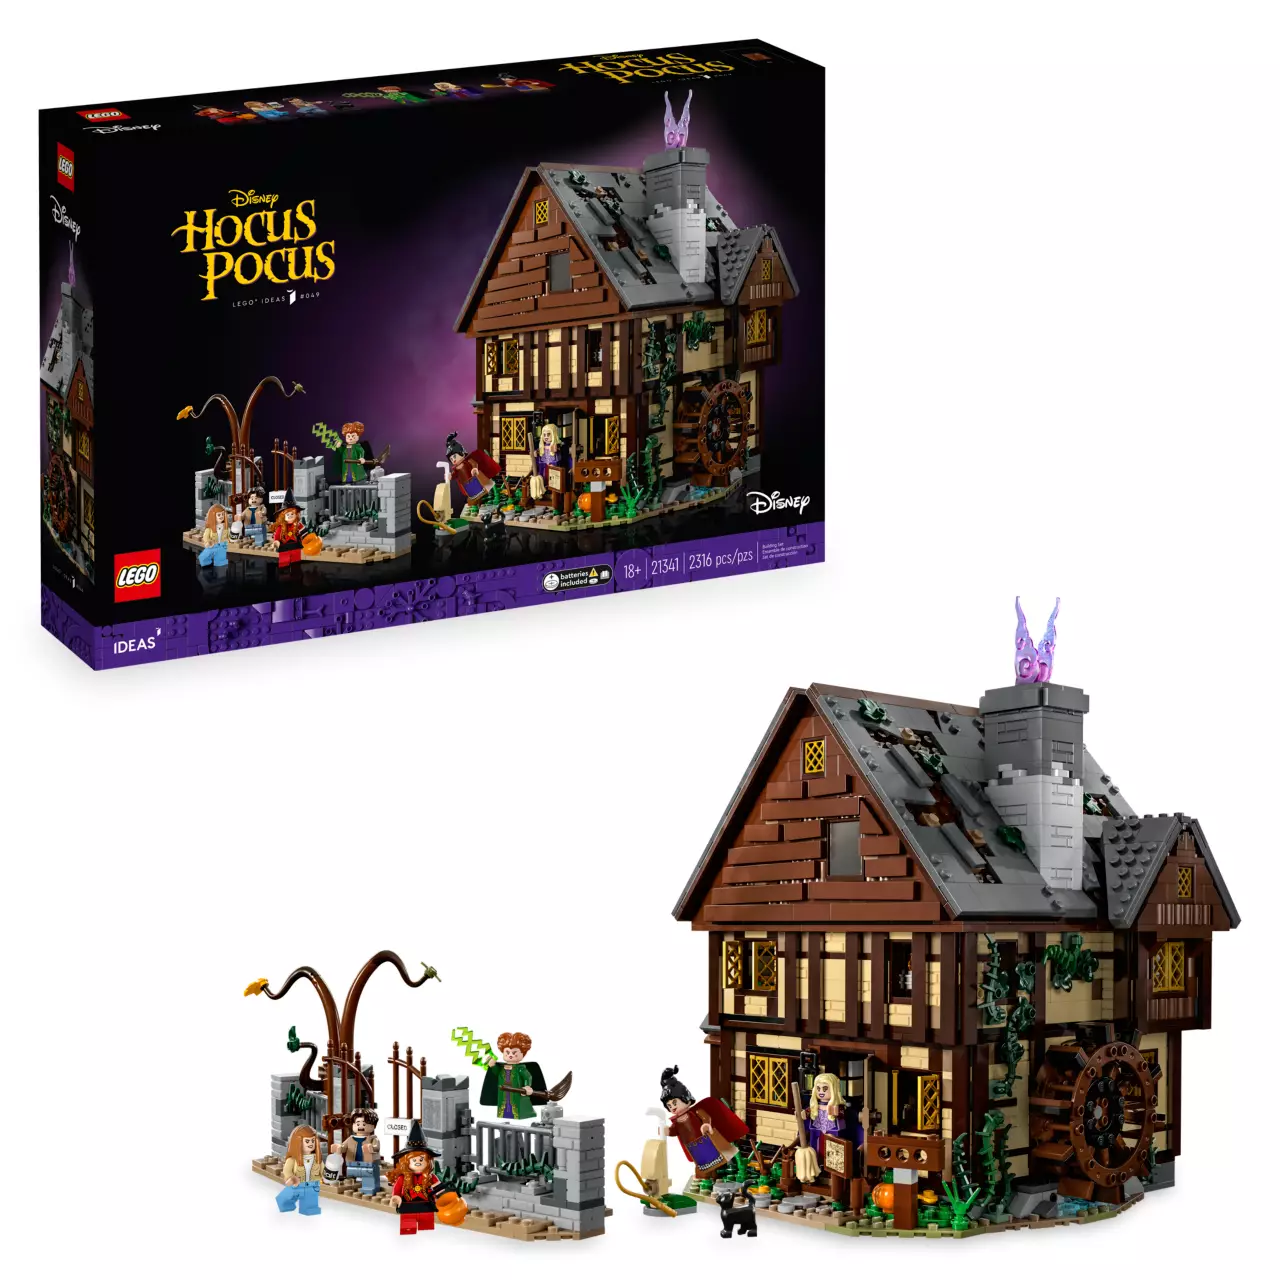 LEGO Disney Hocus Pocus: The Sanderson Sisters' Cottage #21341